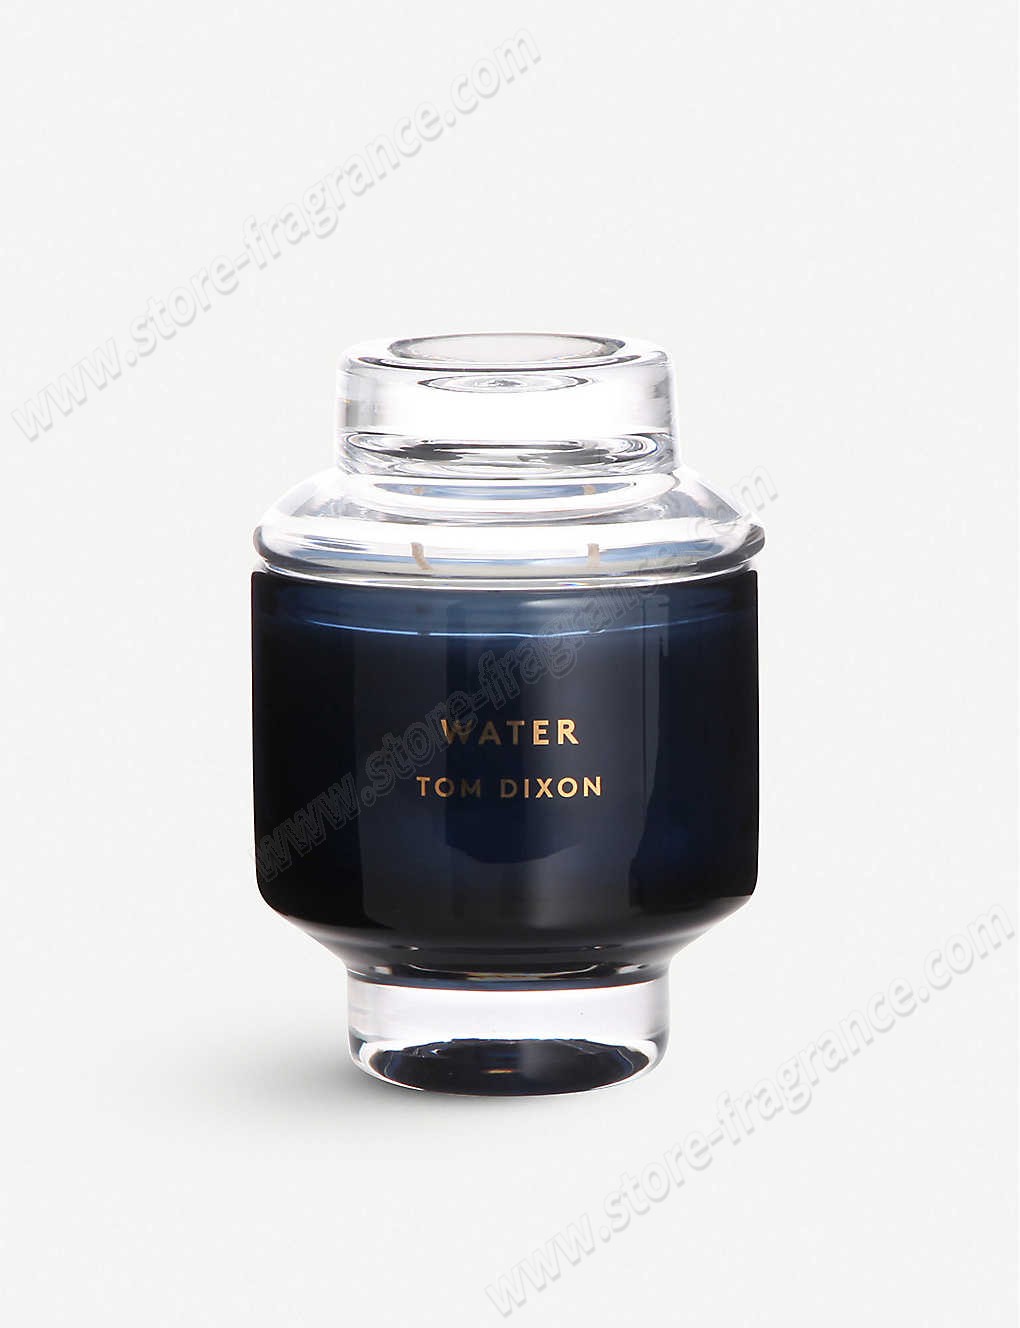 TOM DIXON/Scent Water medium candle ✿ Discount Store - TOM DIXON/Scent Water medium candle ✿ Discount Store